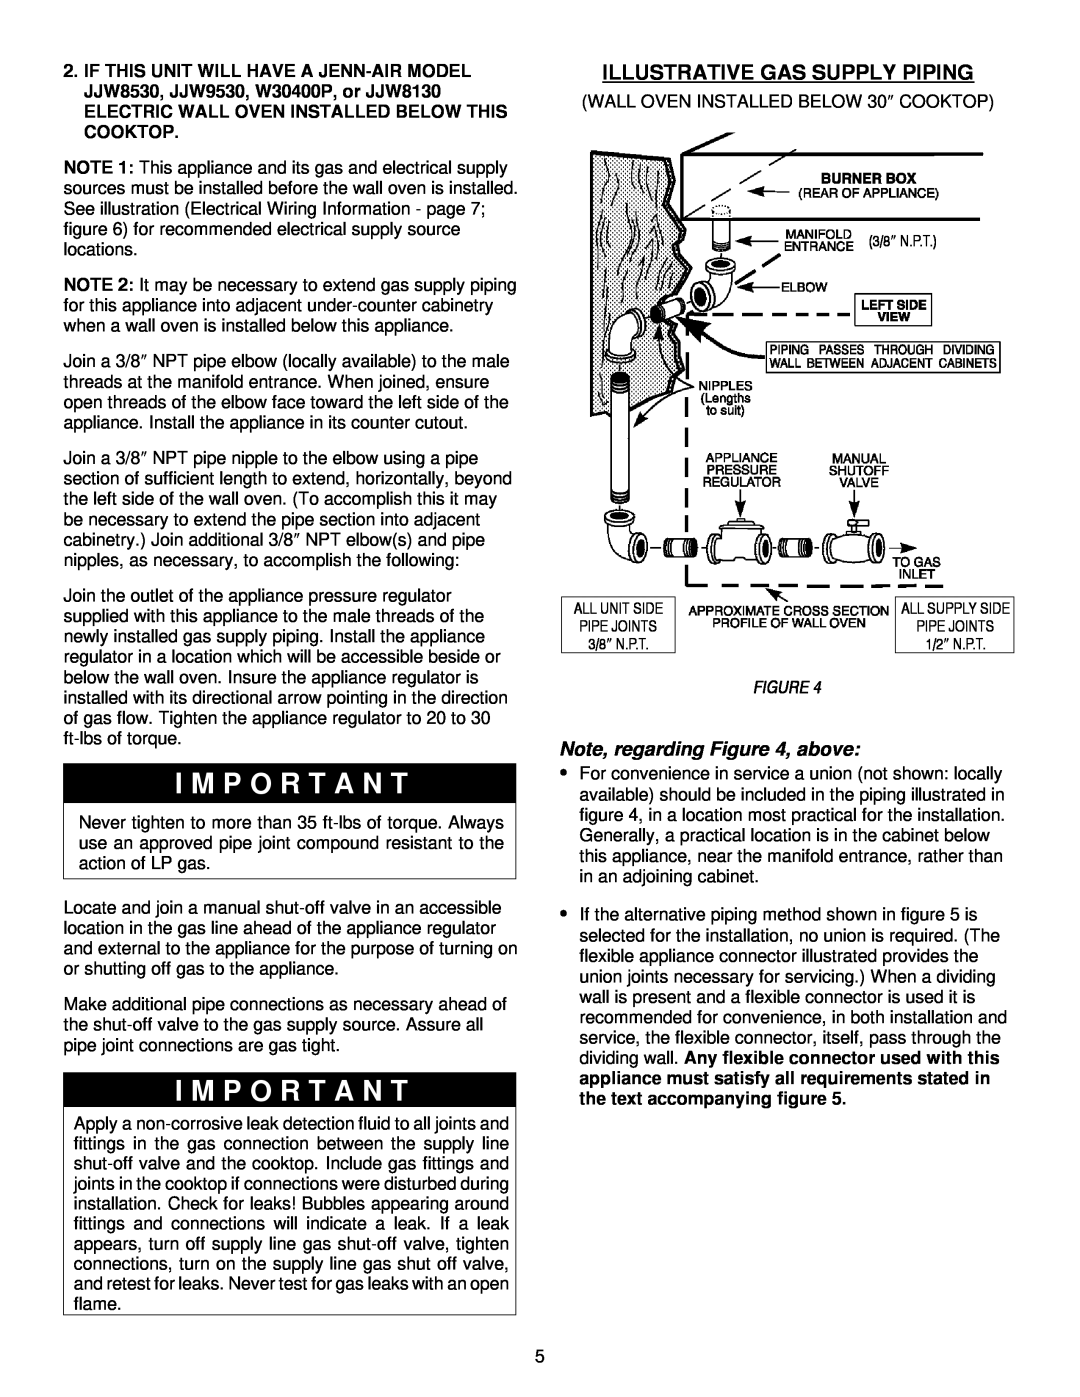 Jenn-Air JGC9536, JGC9430 installation manual I M P O R T A N T, Illustrative Gas Supply Piping, Note, regarding , above 